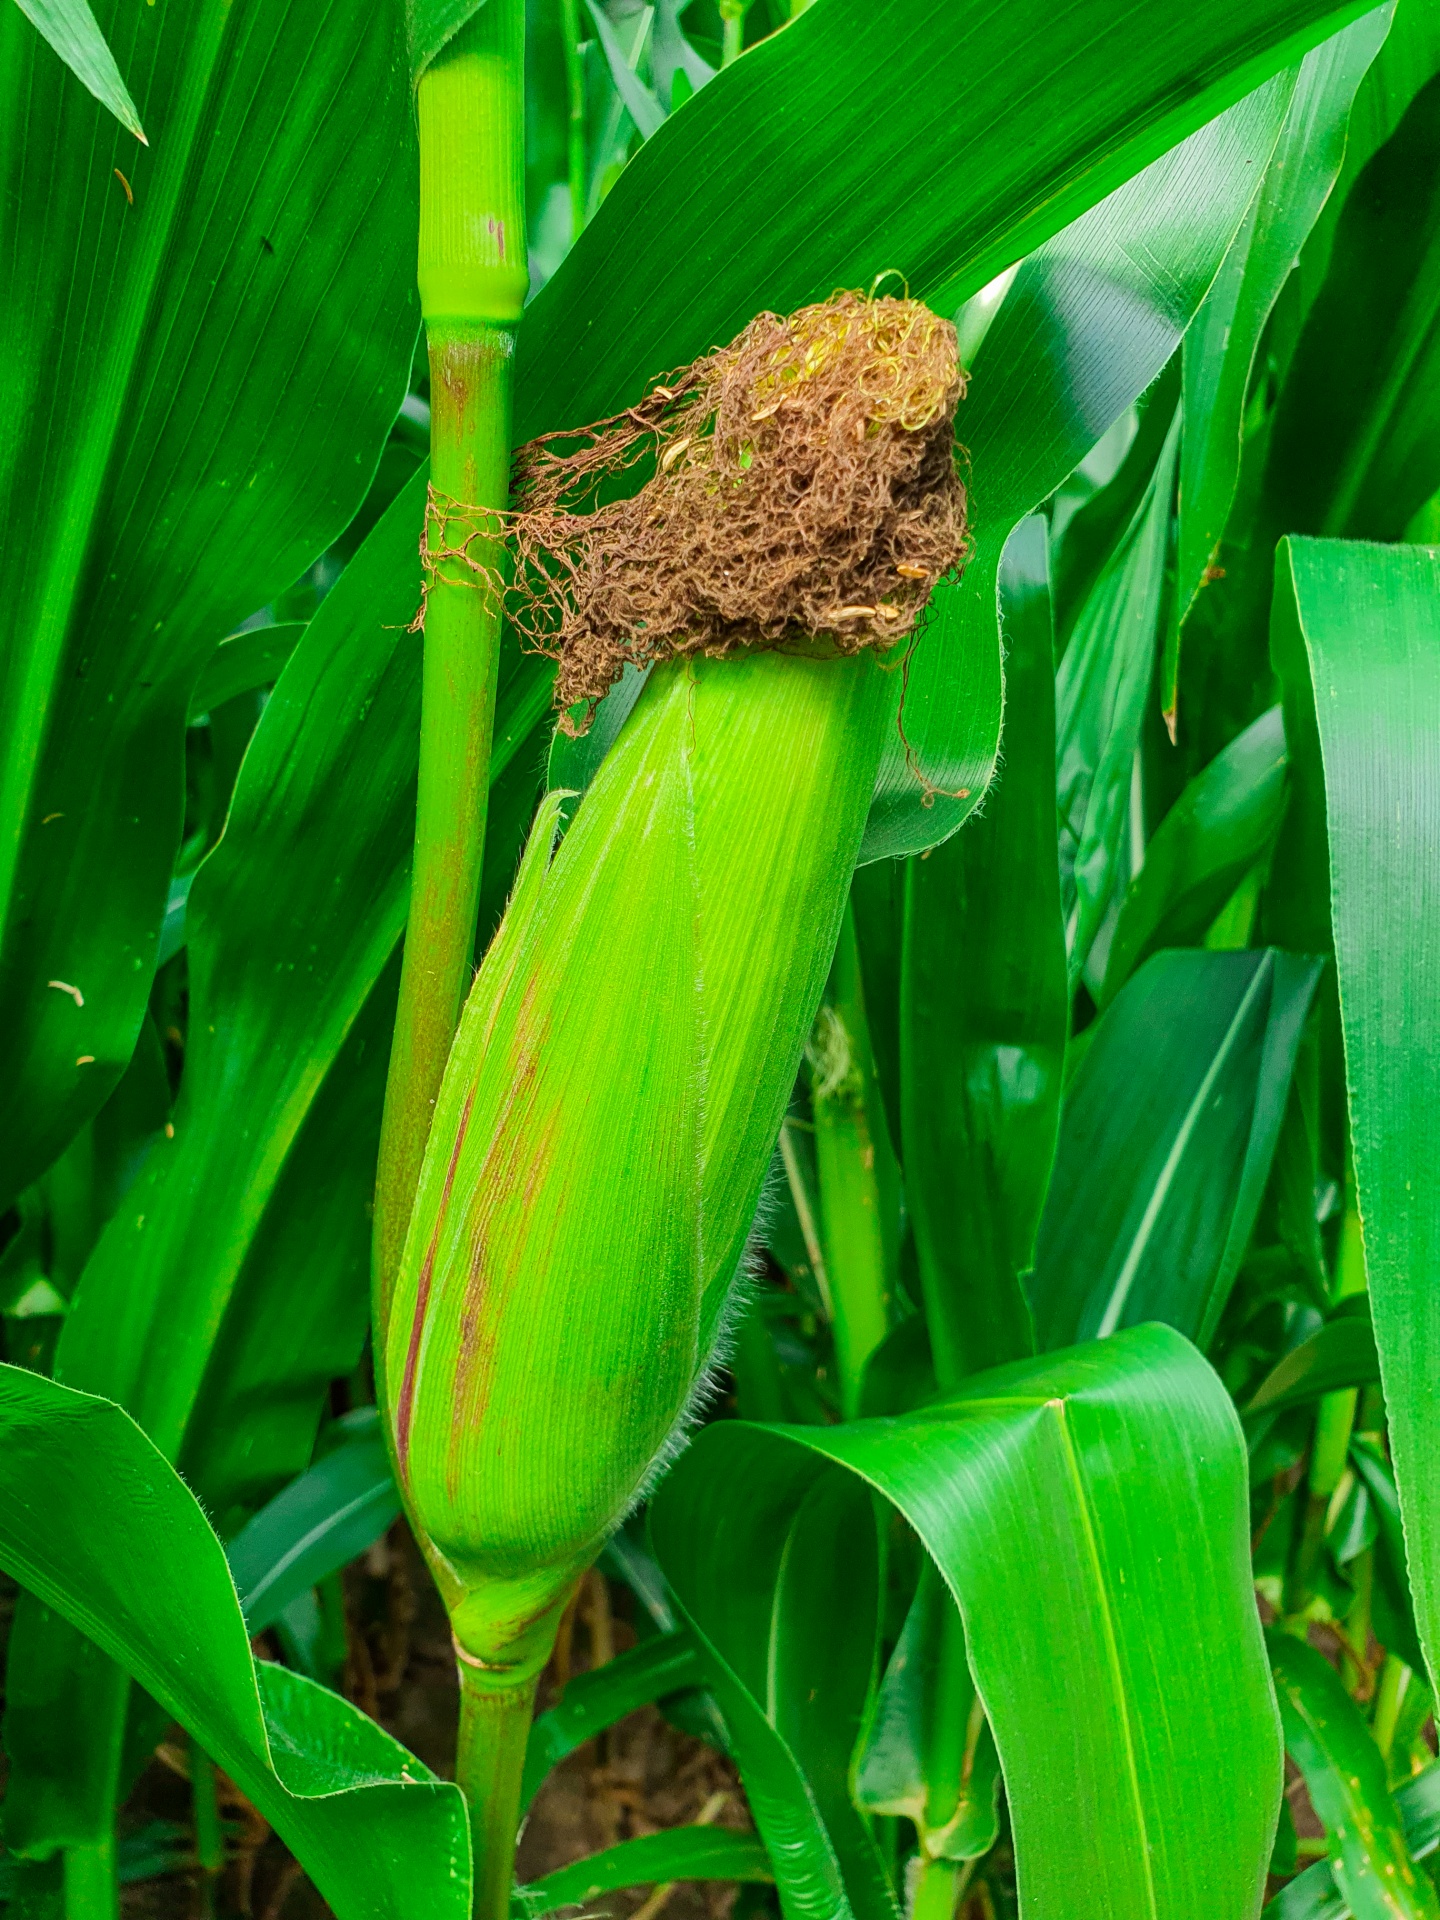 Growing Corn Cob